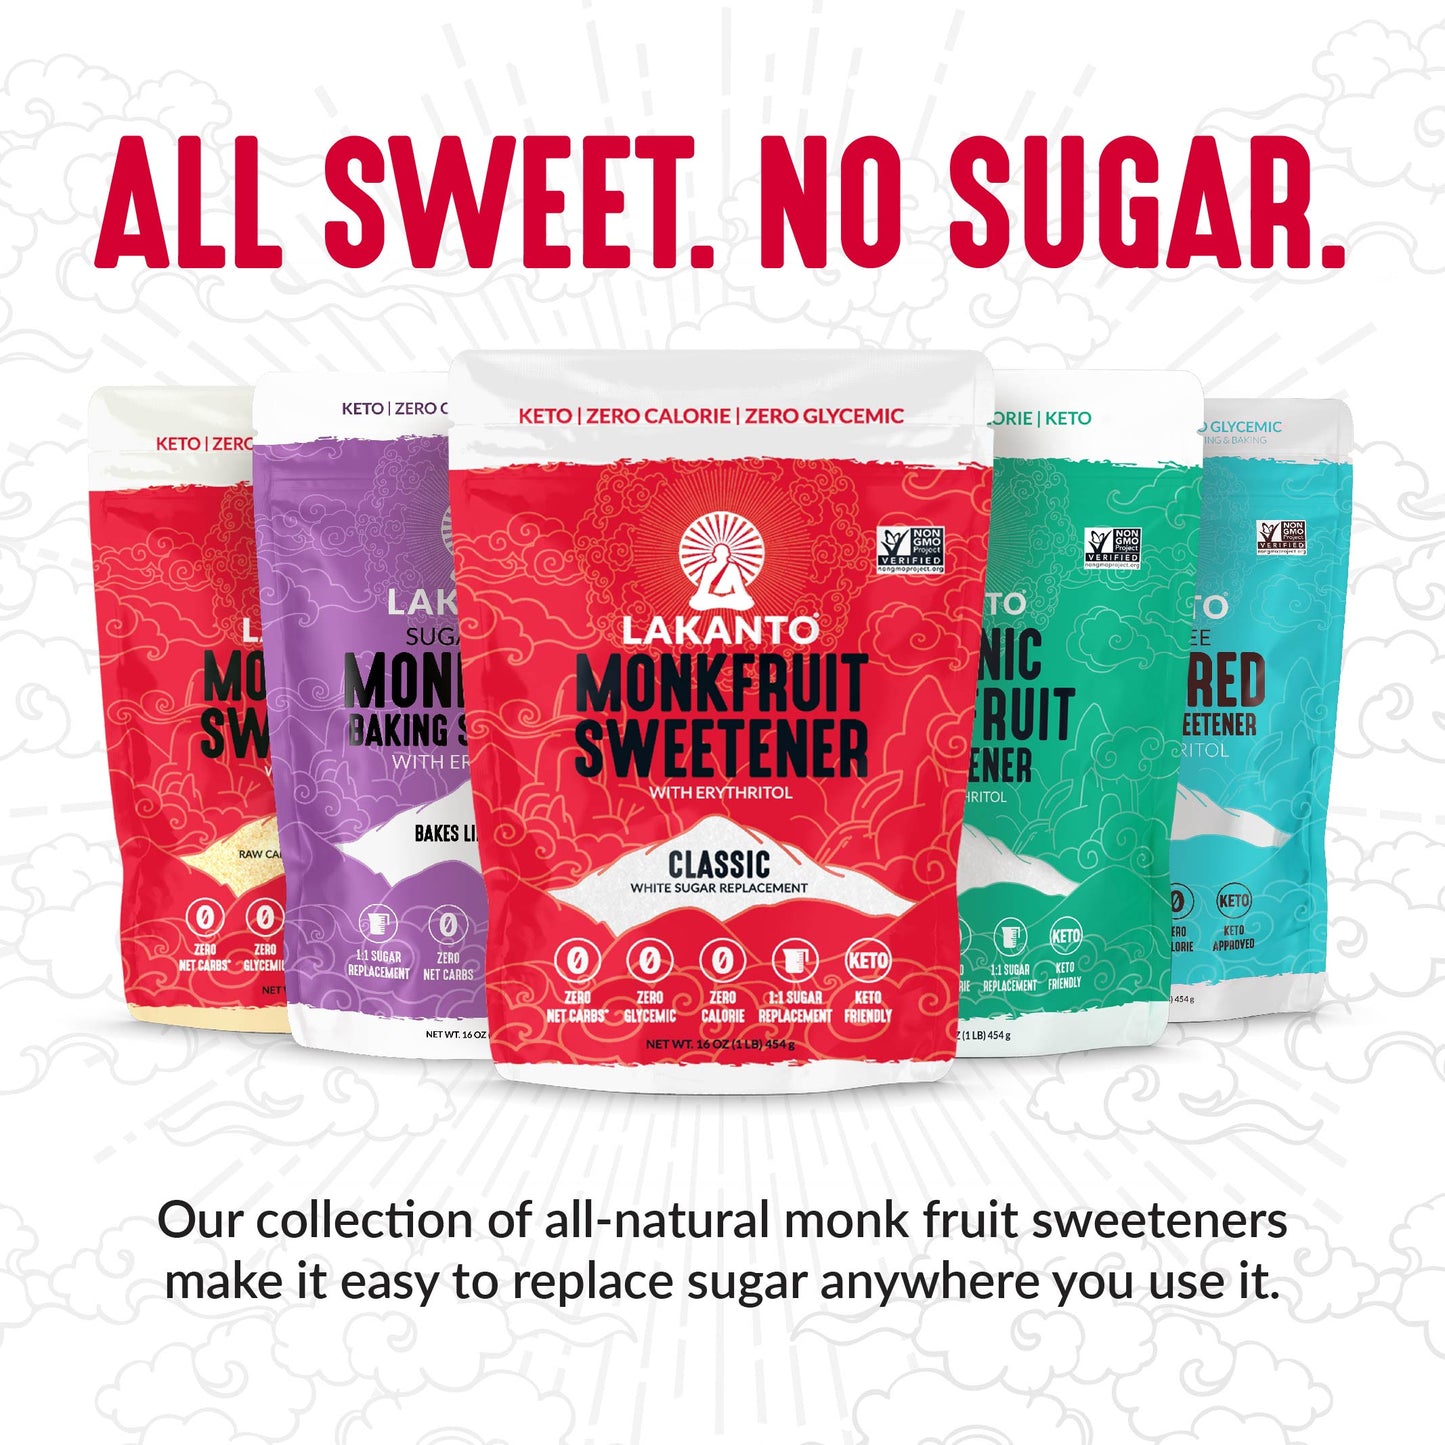 Classic Monk Fruit Sweetener - White Sugar Replacement